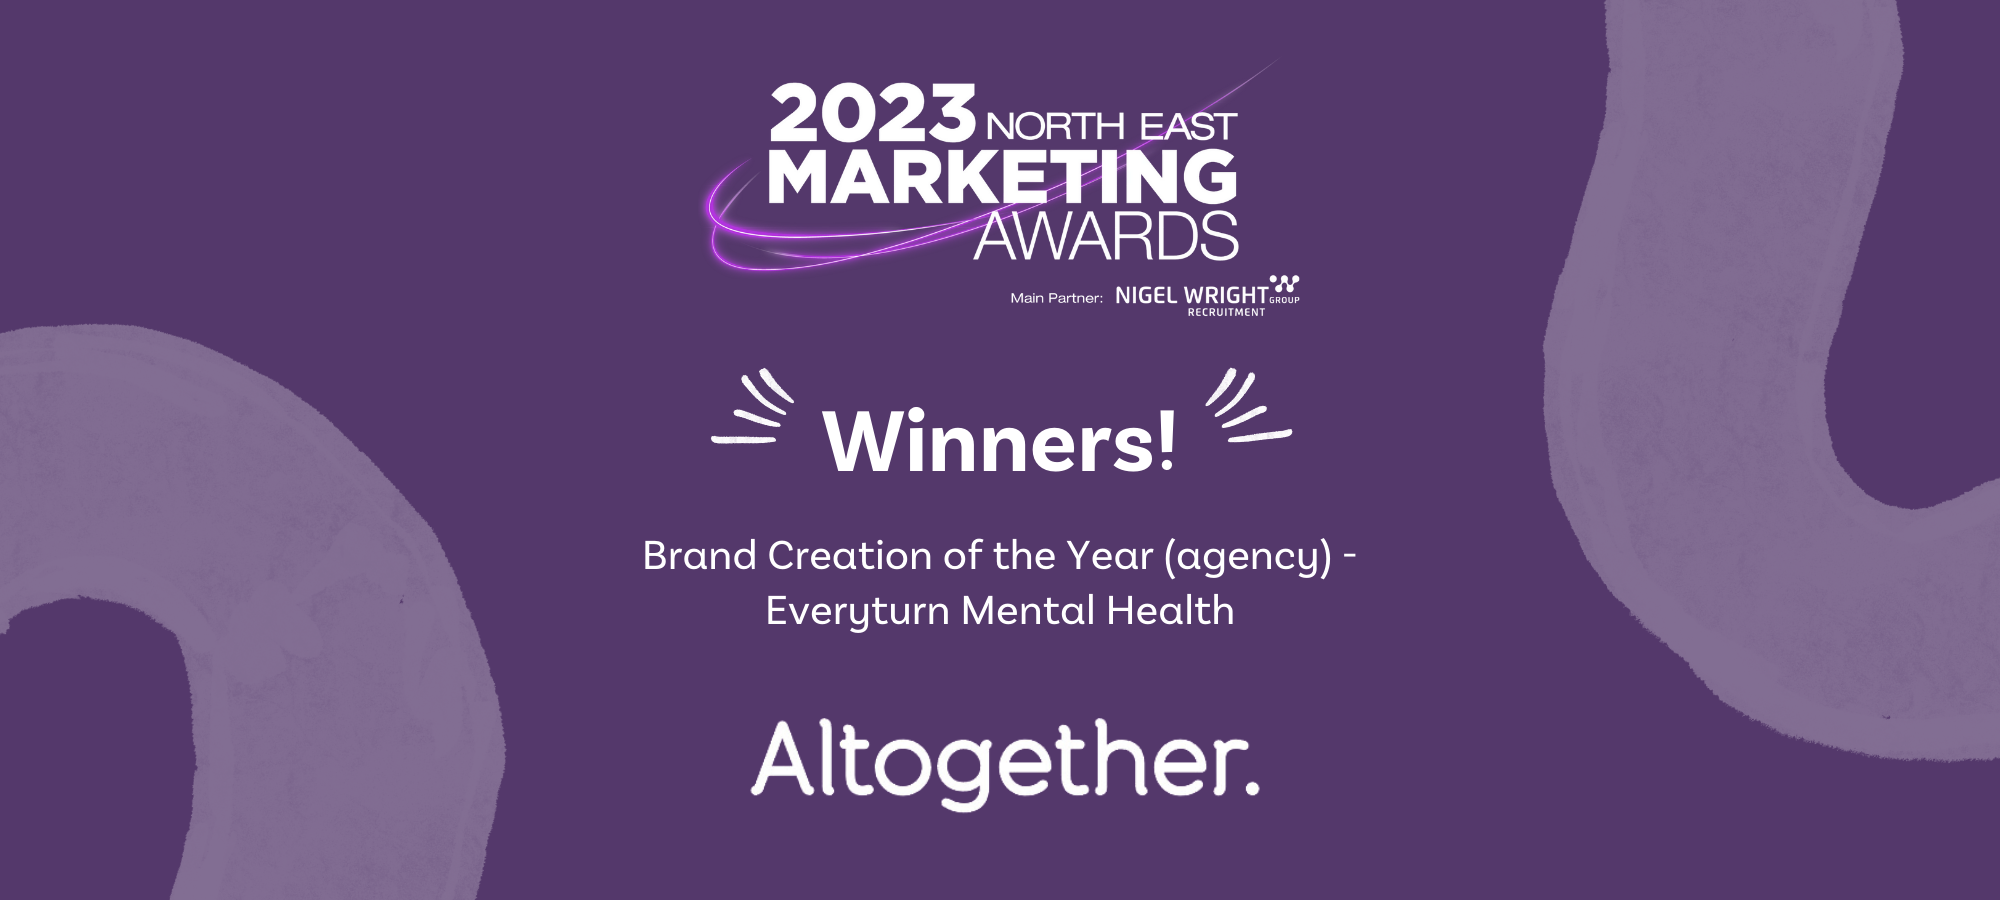 2023 north east marketing awards